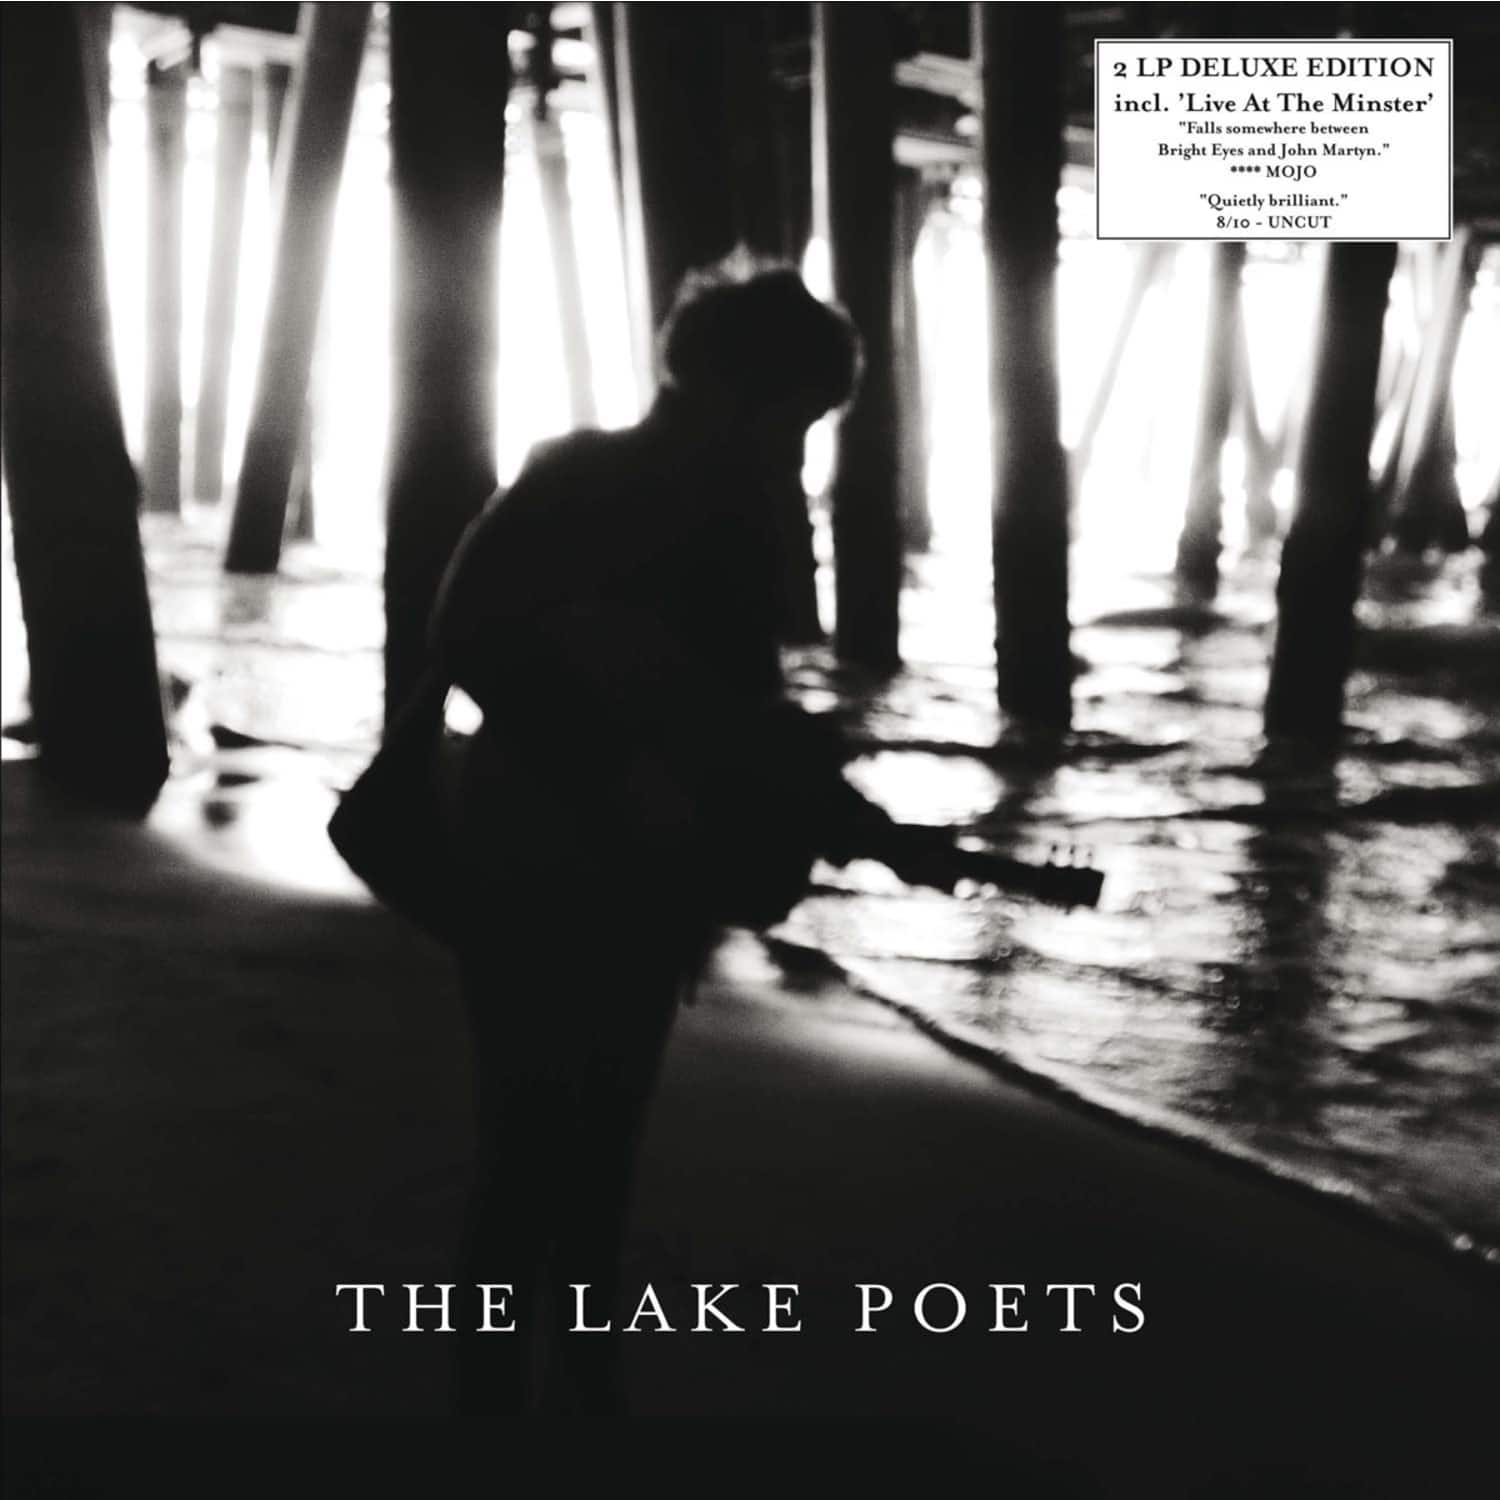 The Lake Poets - THE LAKE POETS 